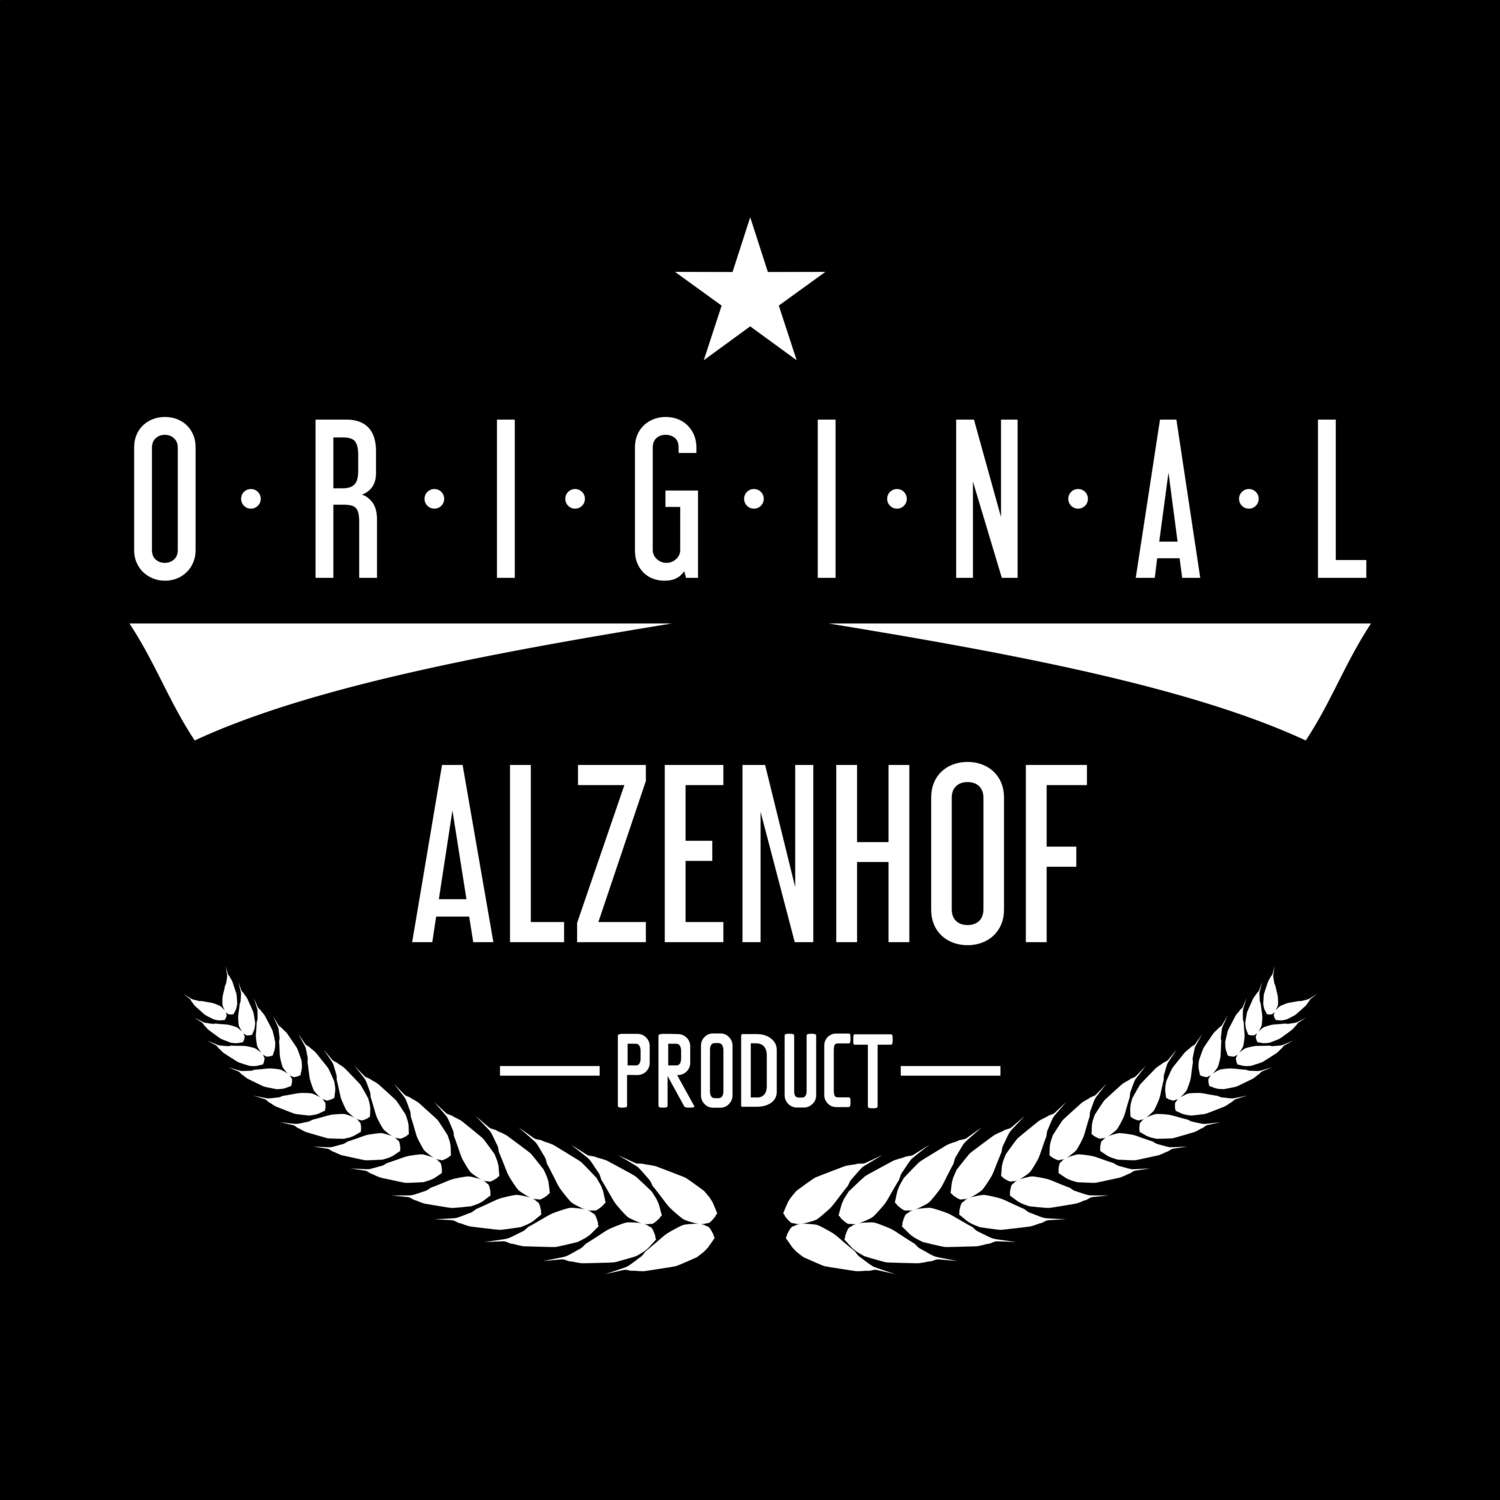 Alzenhof T-Shirt »Original Product«